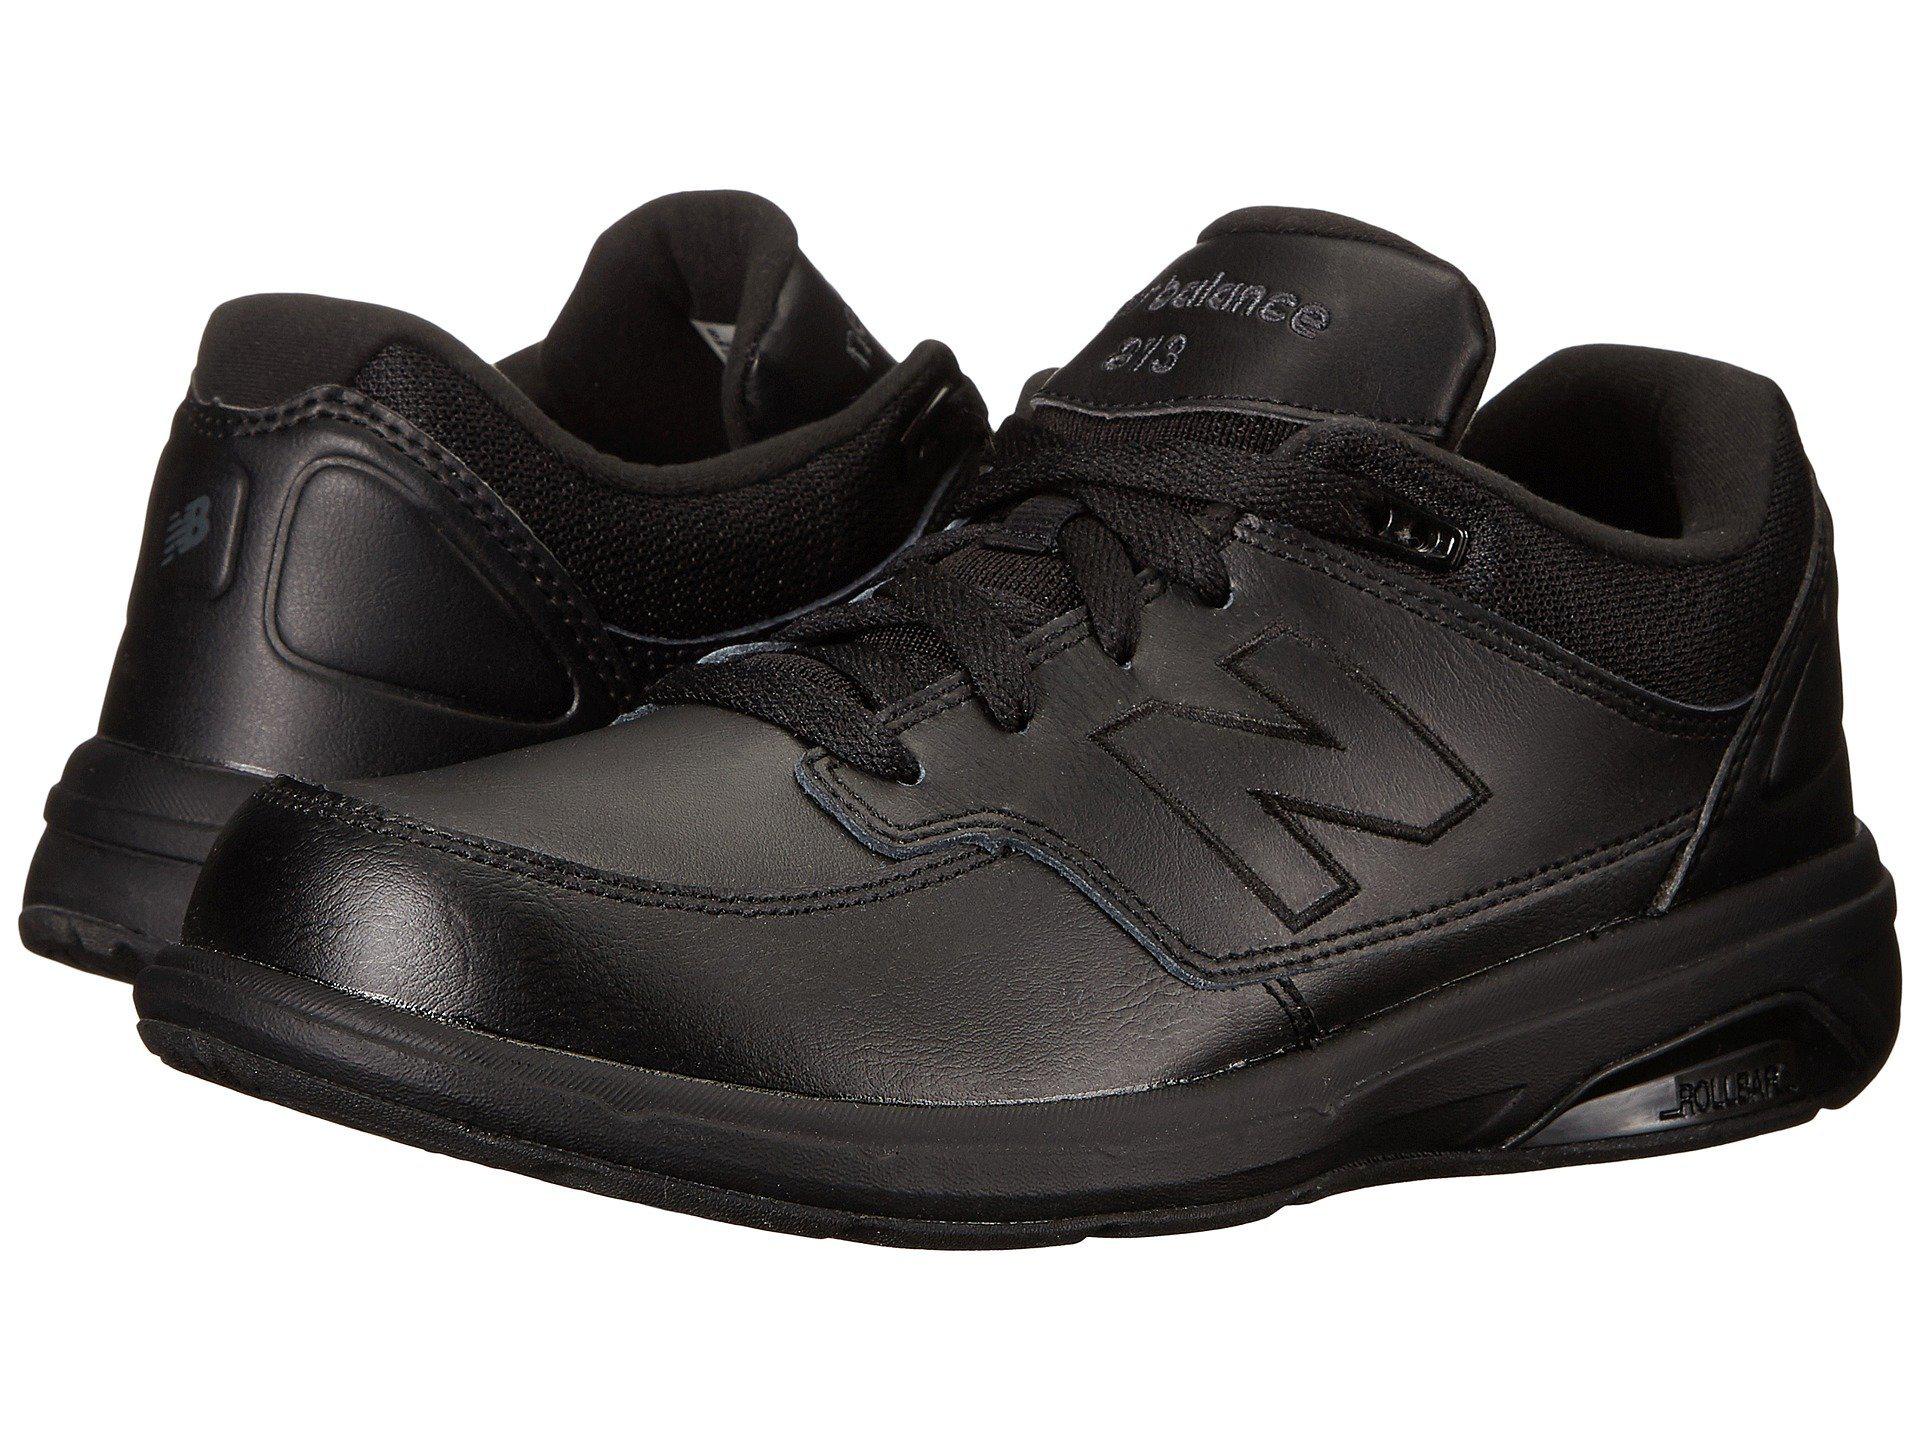 Lyst - New Balance Mw813 (black/black) Men's Walking Shoes in Black for ...